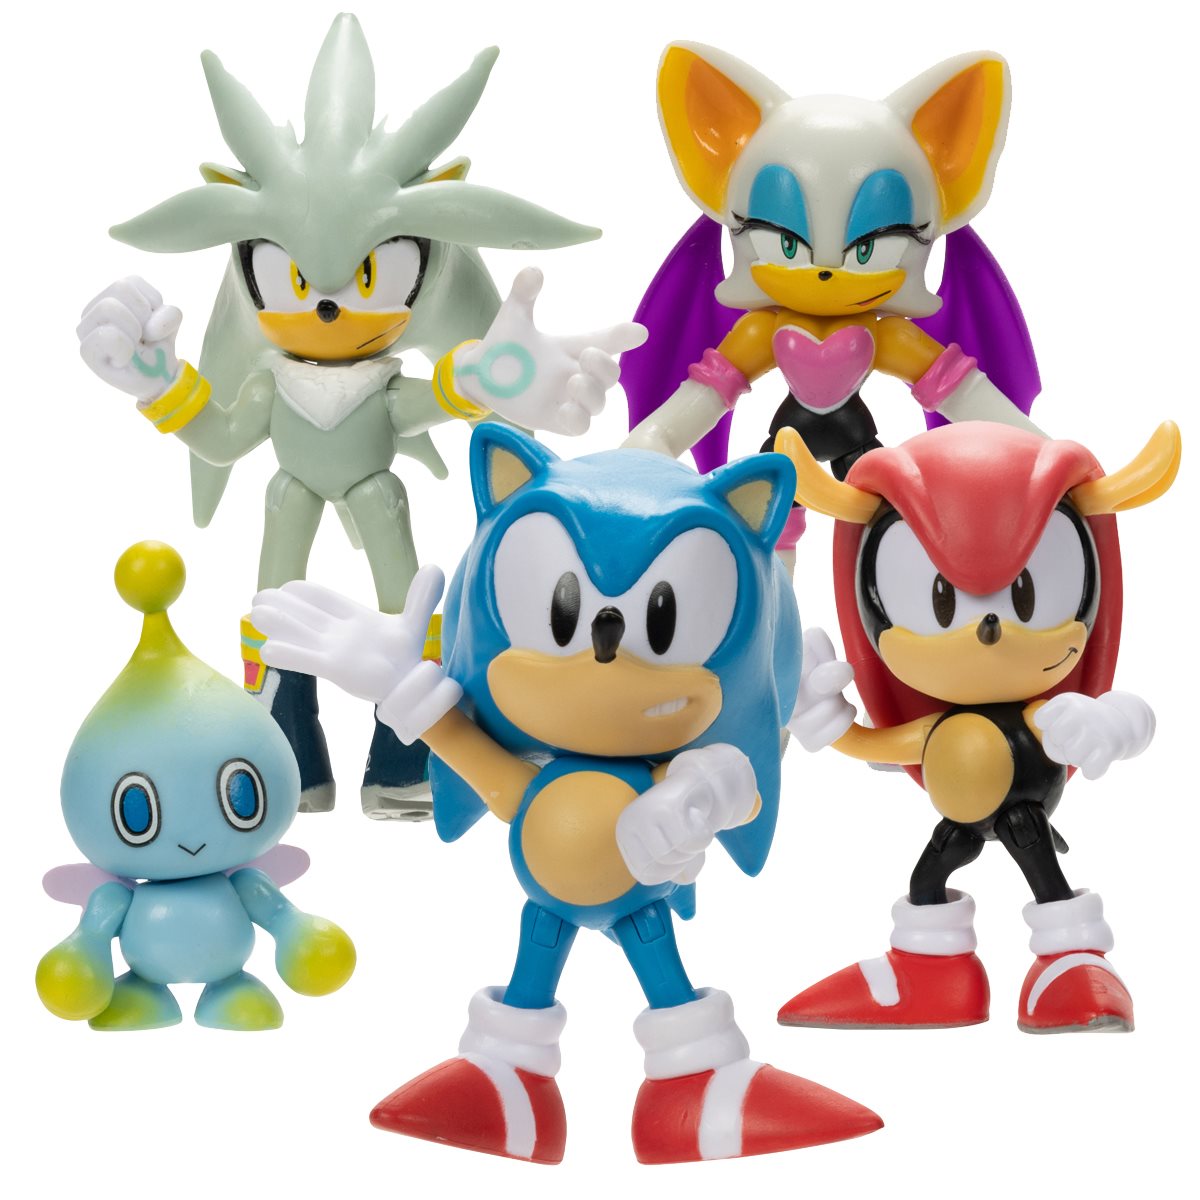 Sonic the Hedgehog 2 4 Wave 2 Set of 4 Figures, sonic sonic 2